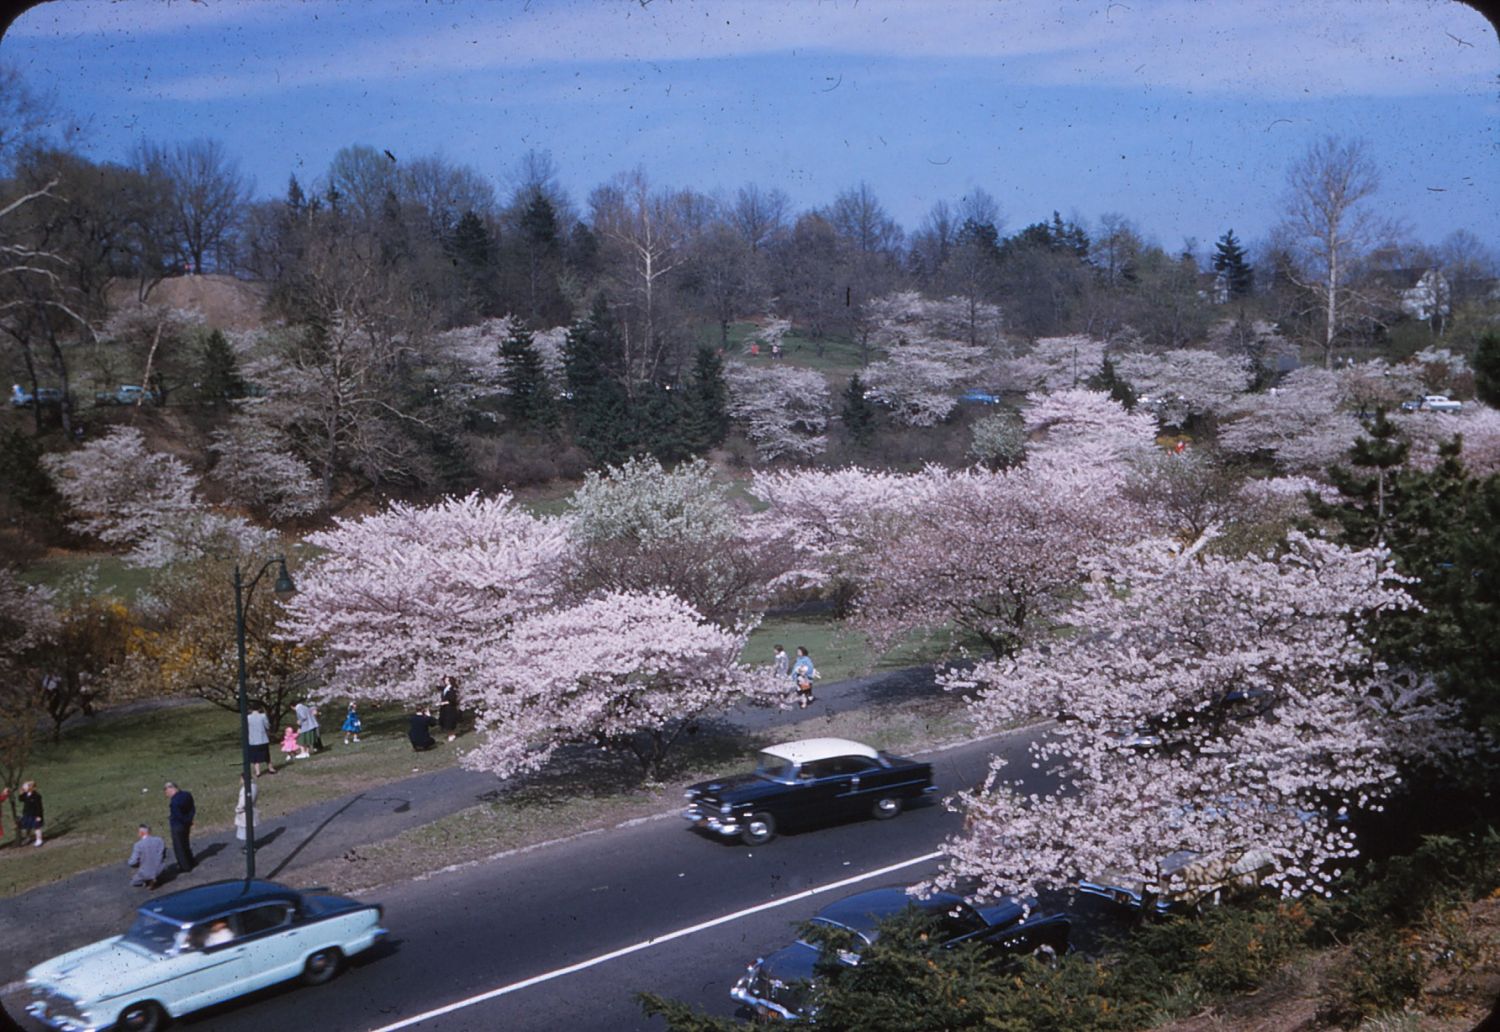 1957
Photo from Bill Ridge
